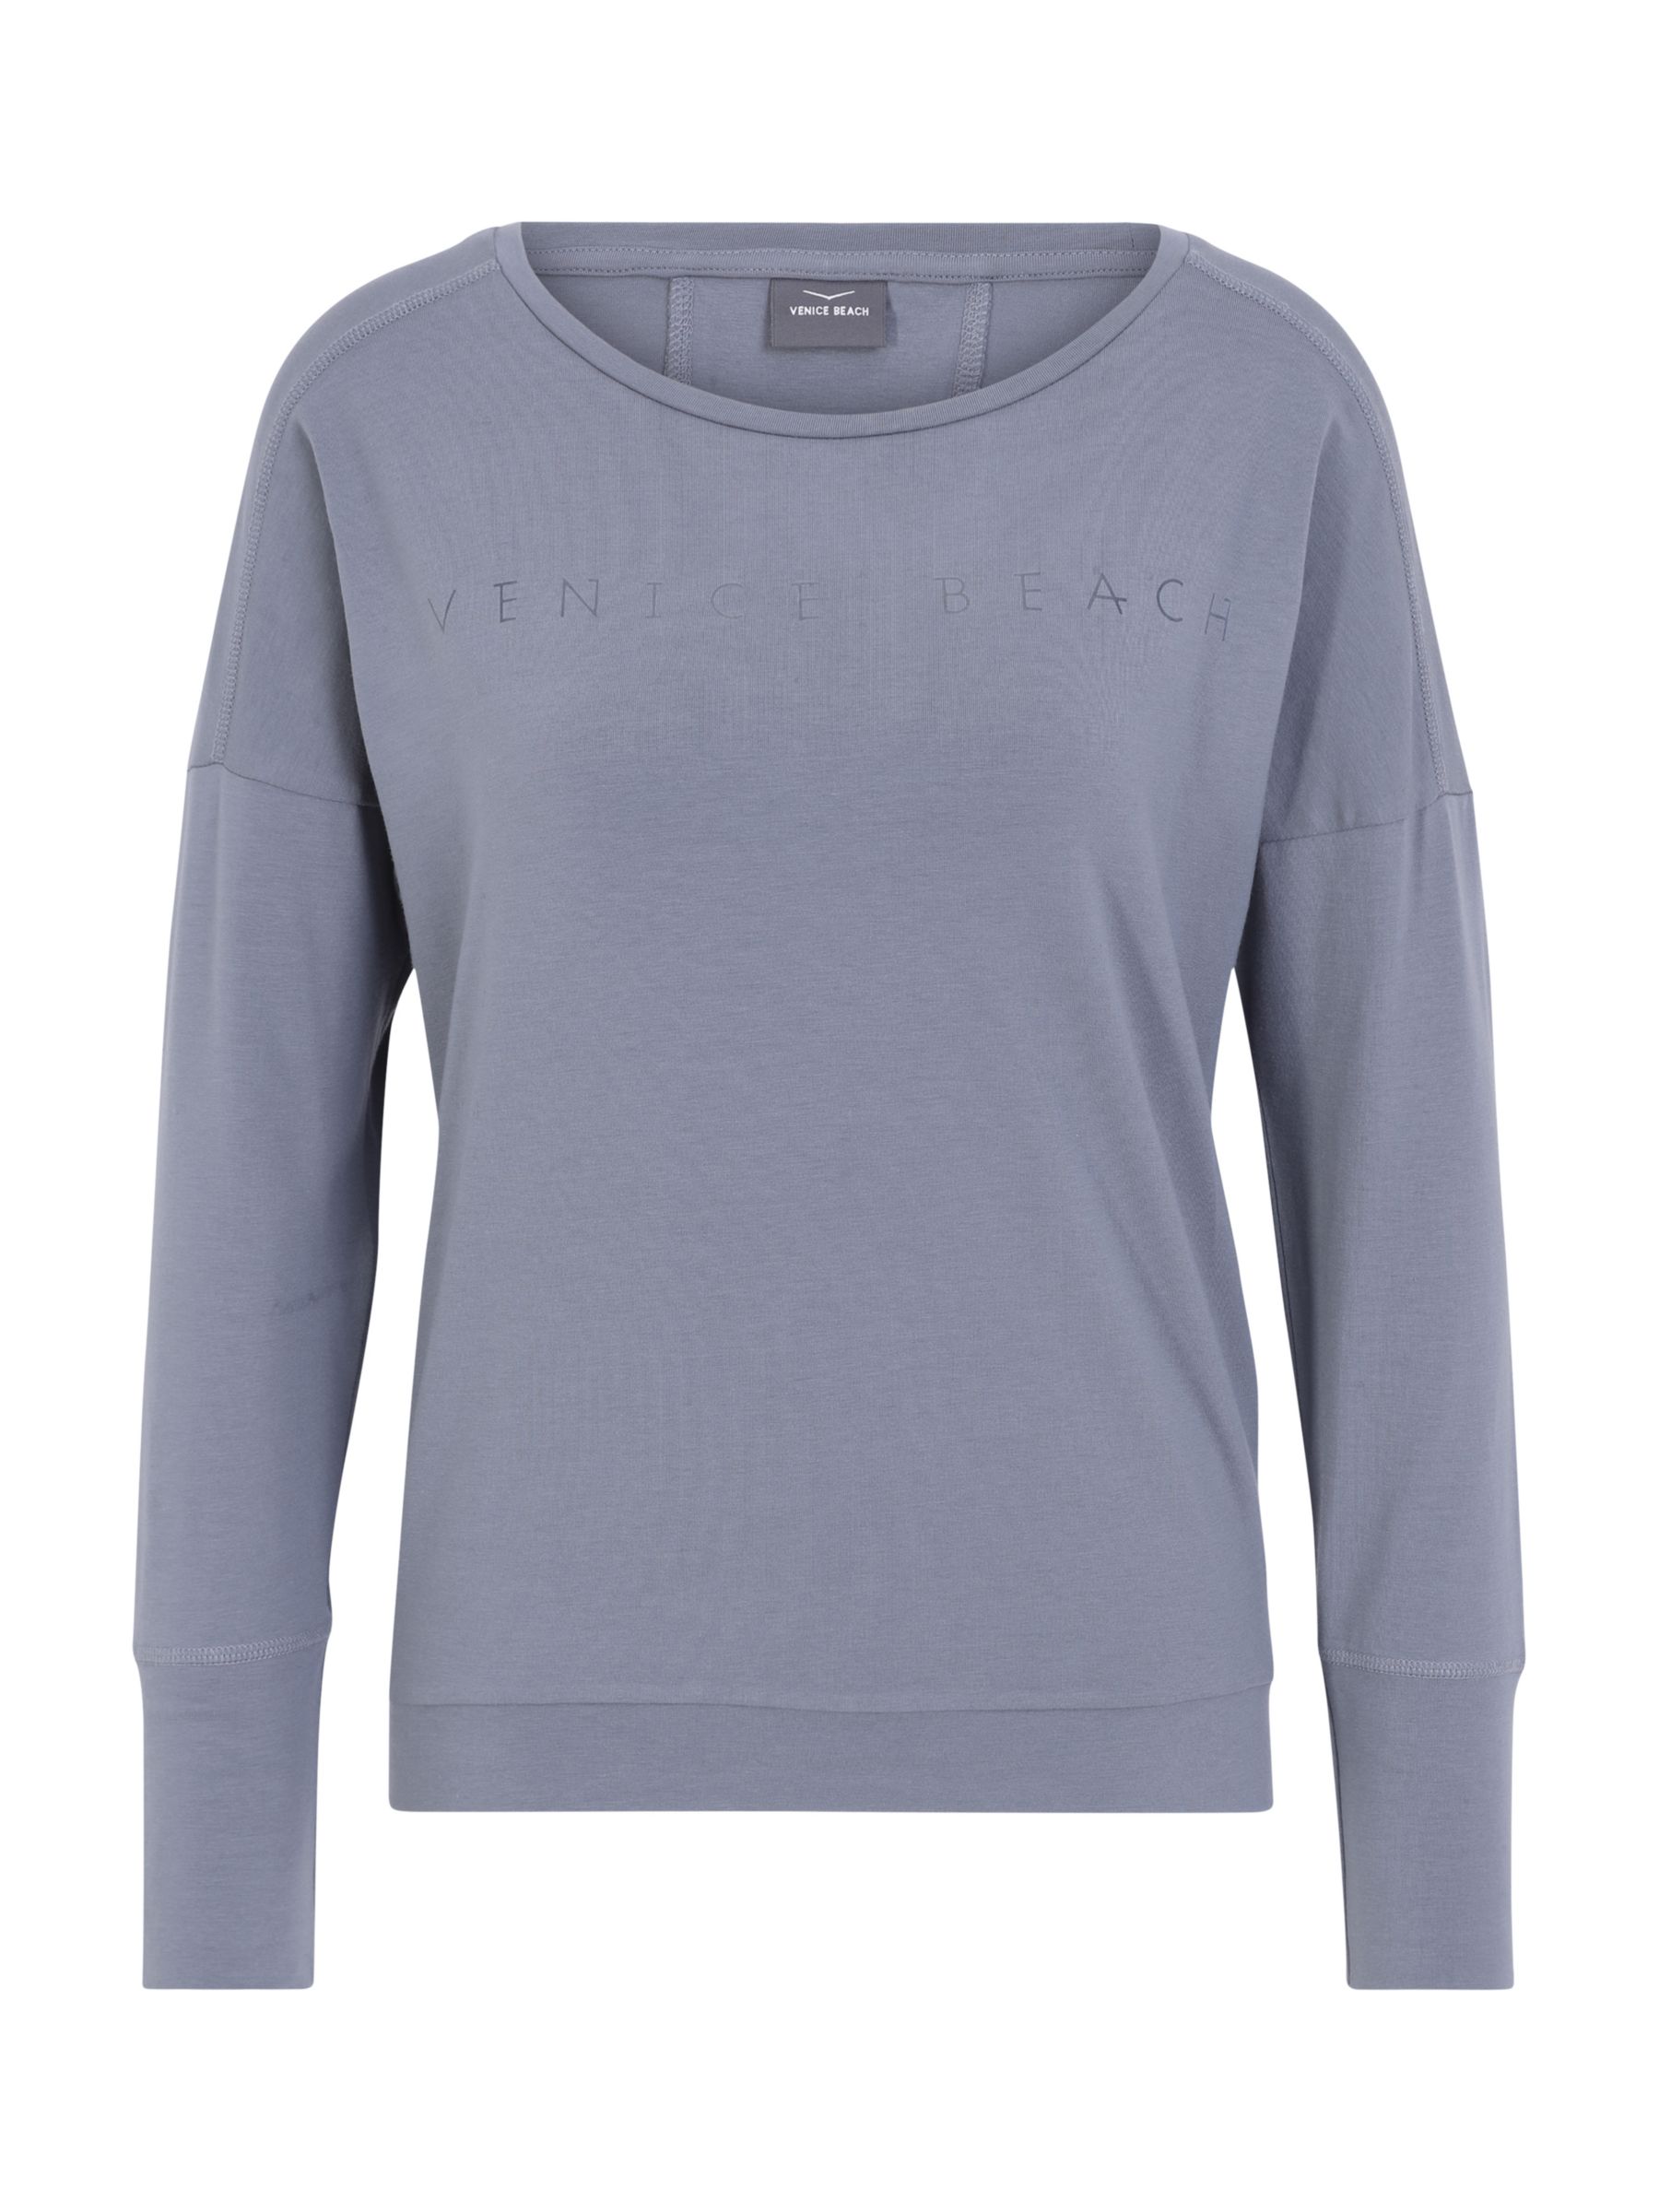 Venice Beach Luemi Sweatshirt, Mirage Grey at John Lewis & Partners